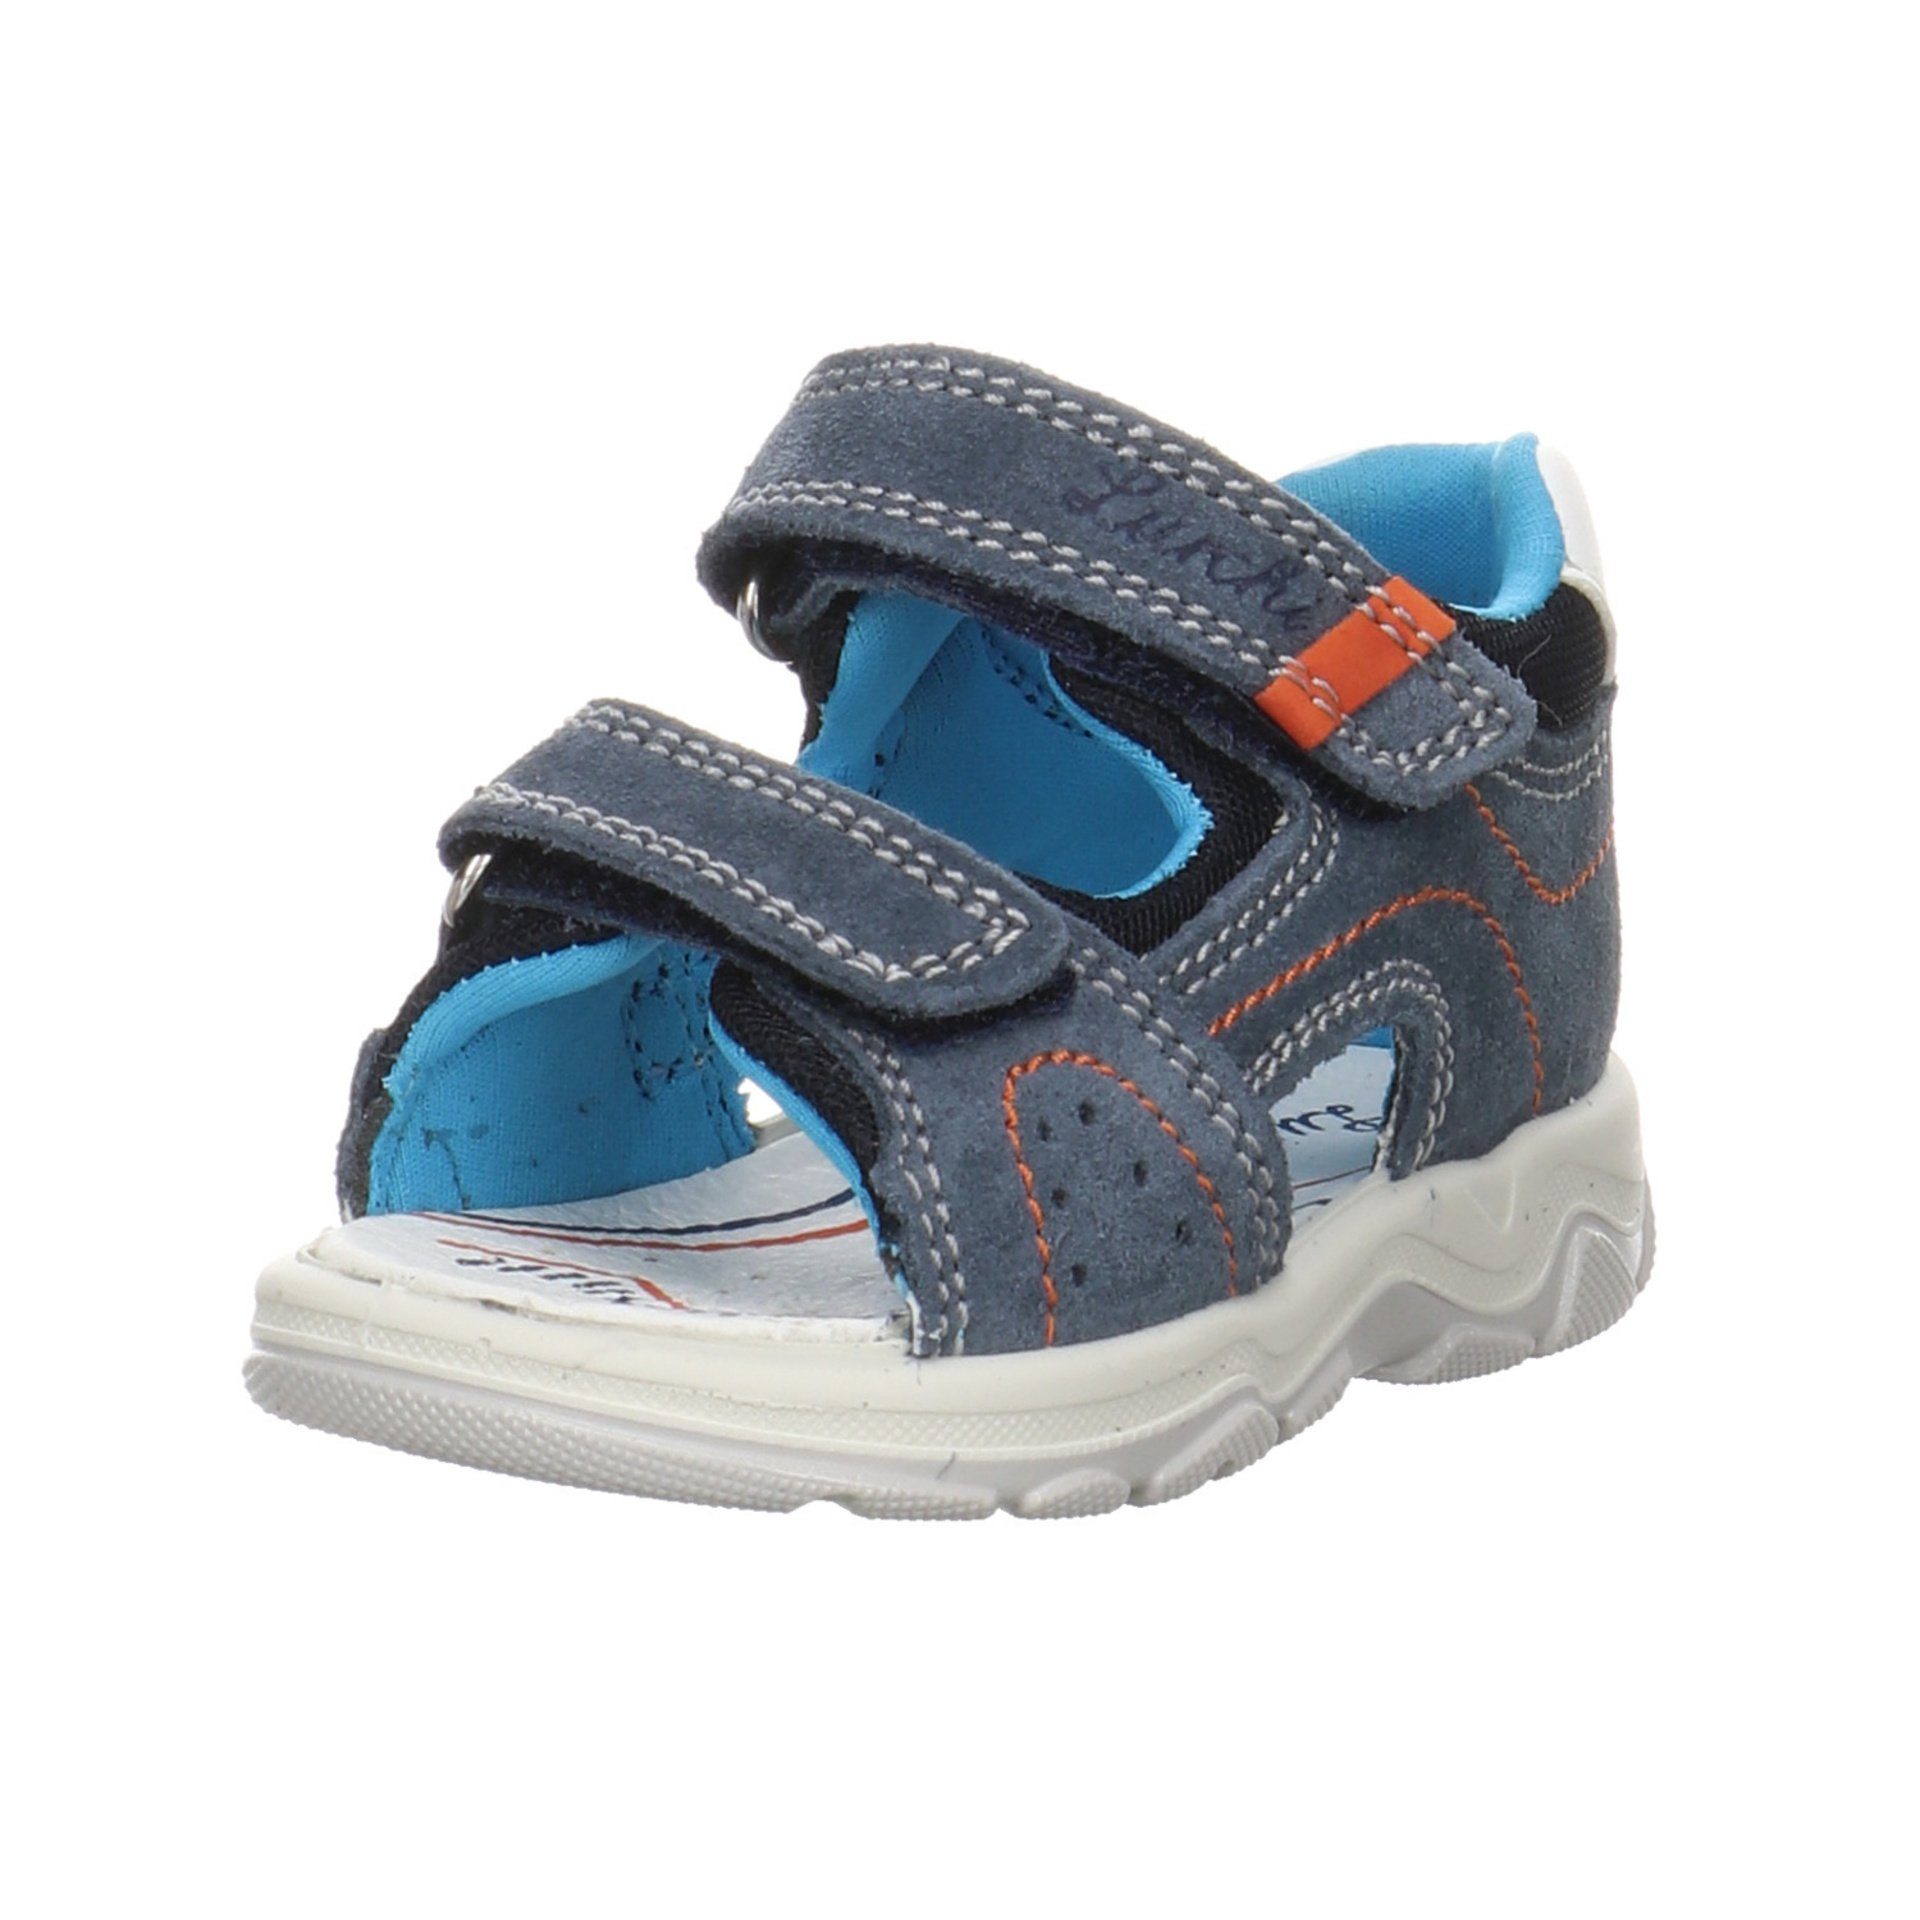 Lurchi Gani Minilette Kinderschuhe Sandale Leder-/Textilkombination